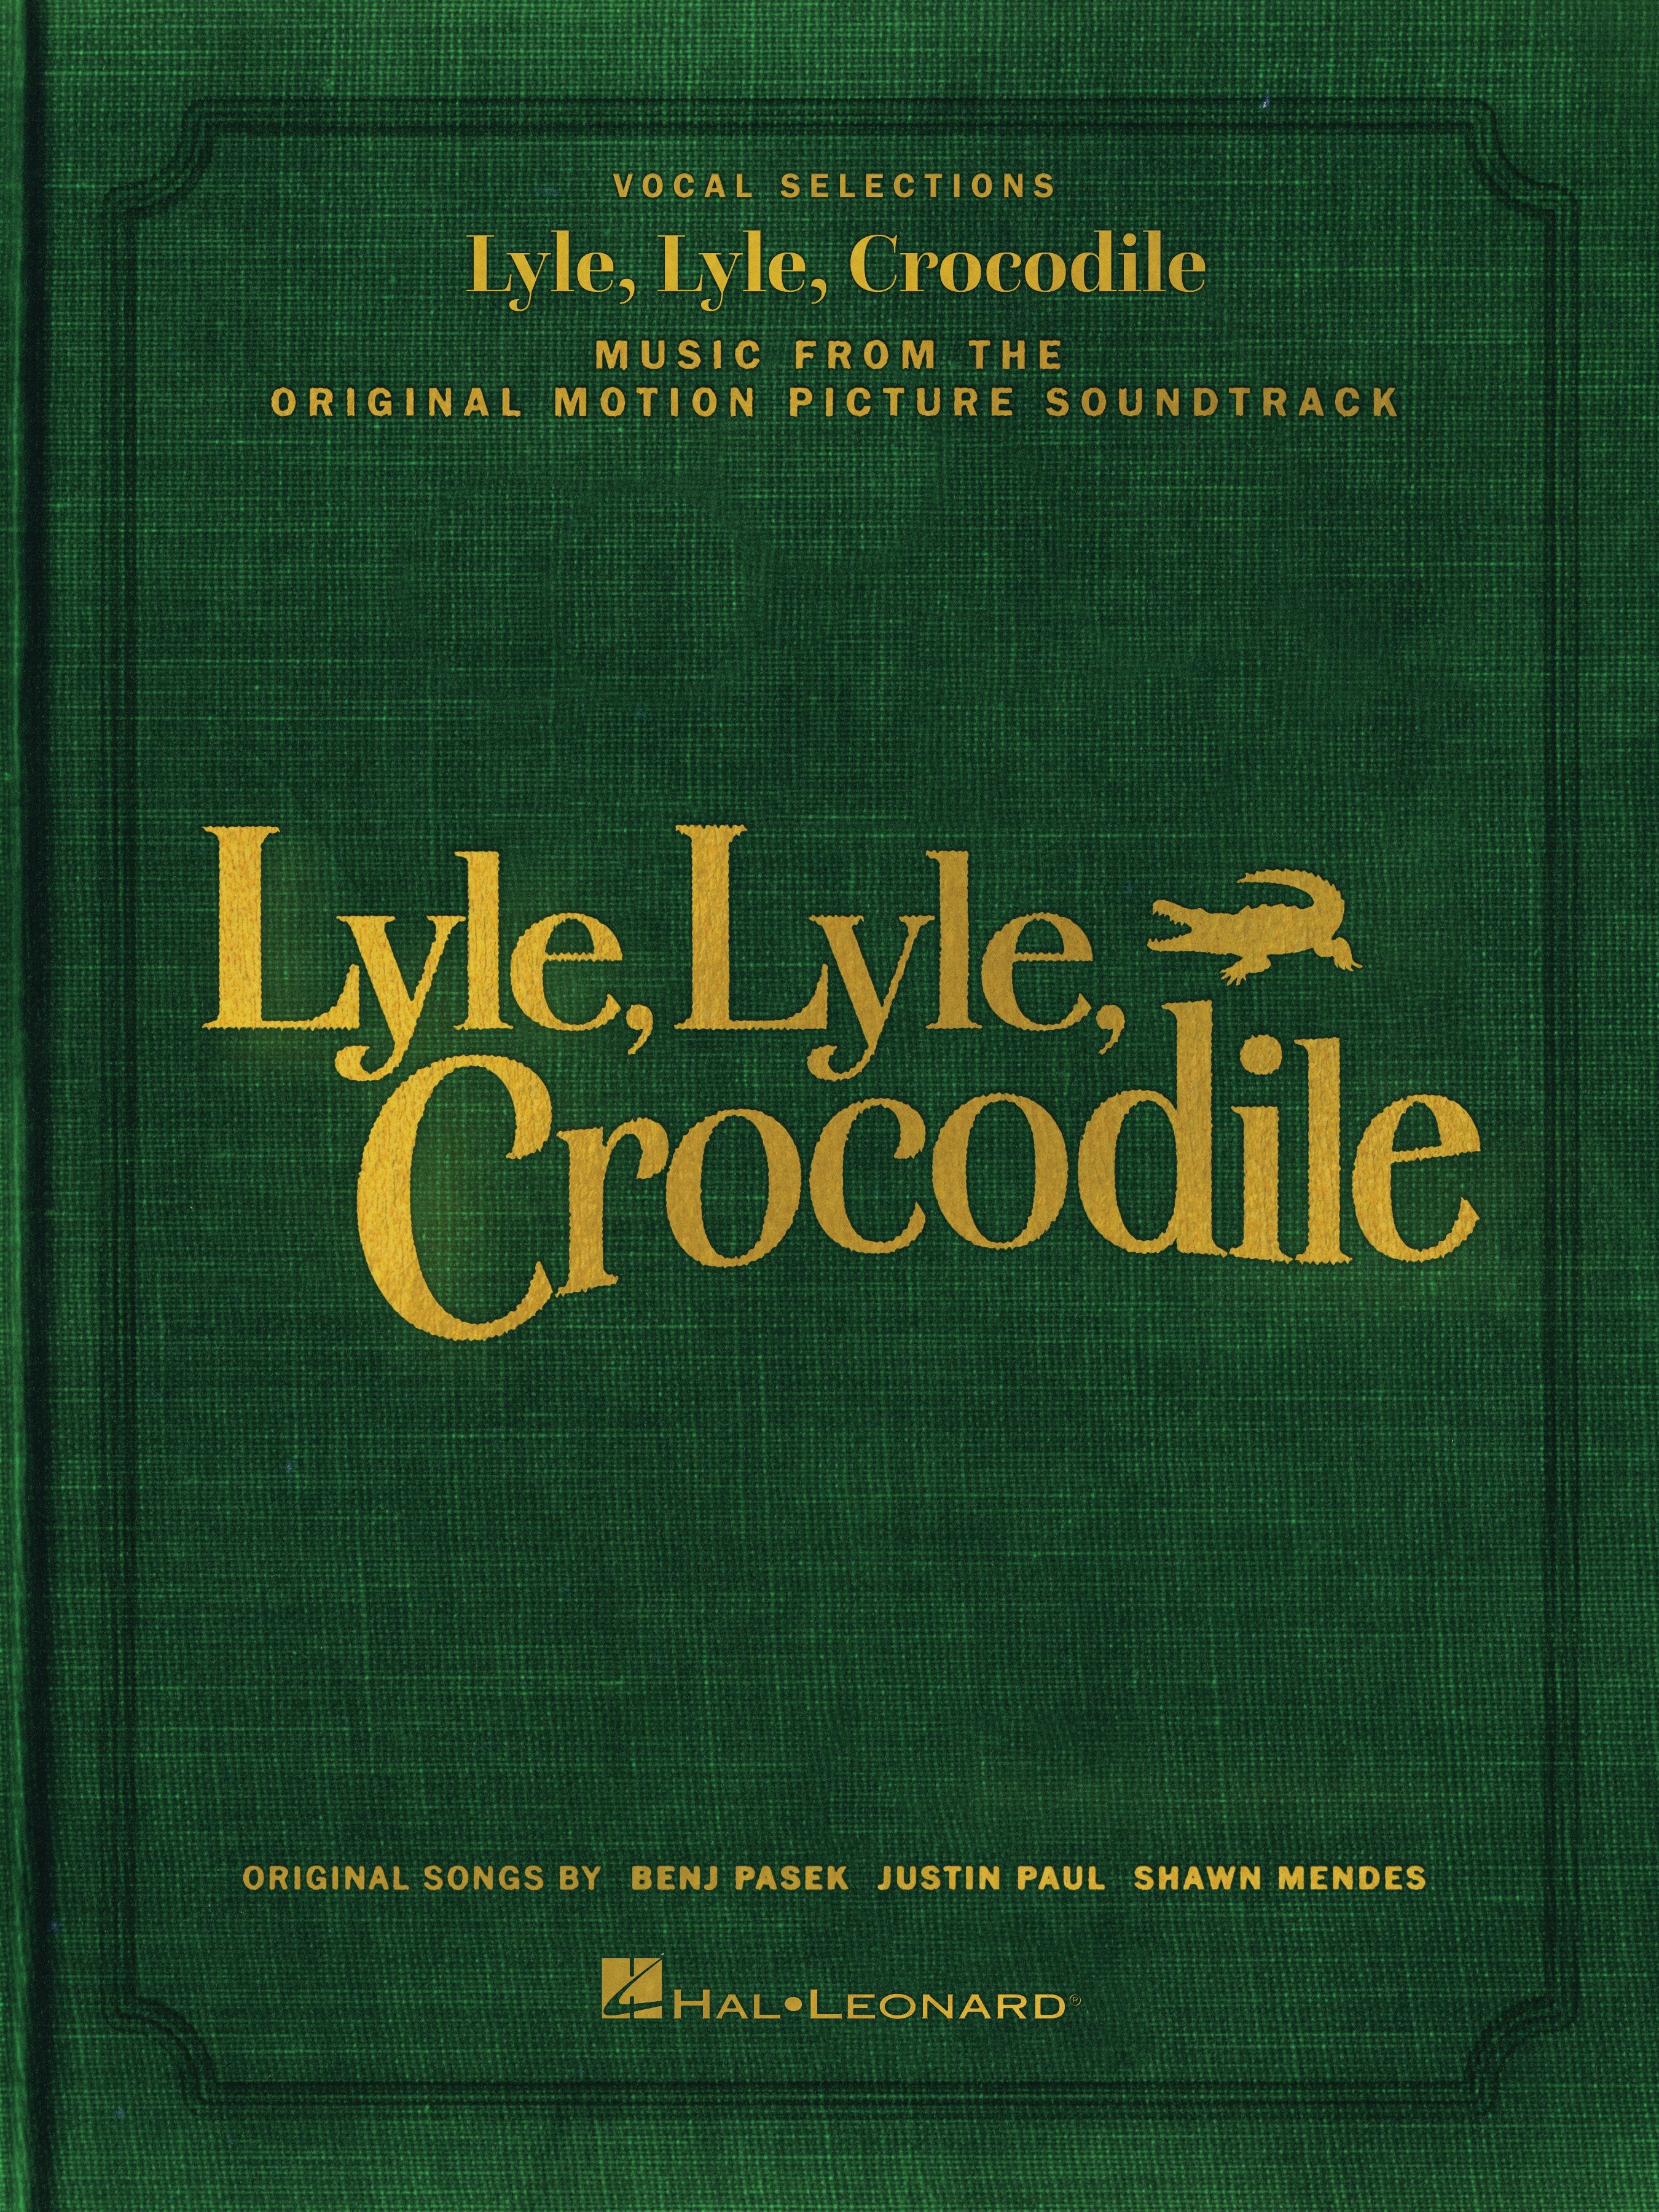 Lyle, Lyle, Crocodile vocal sheet music cover